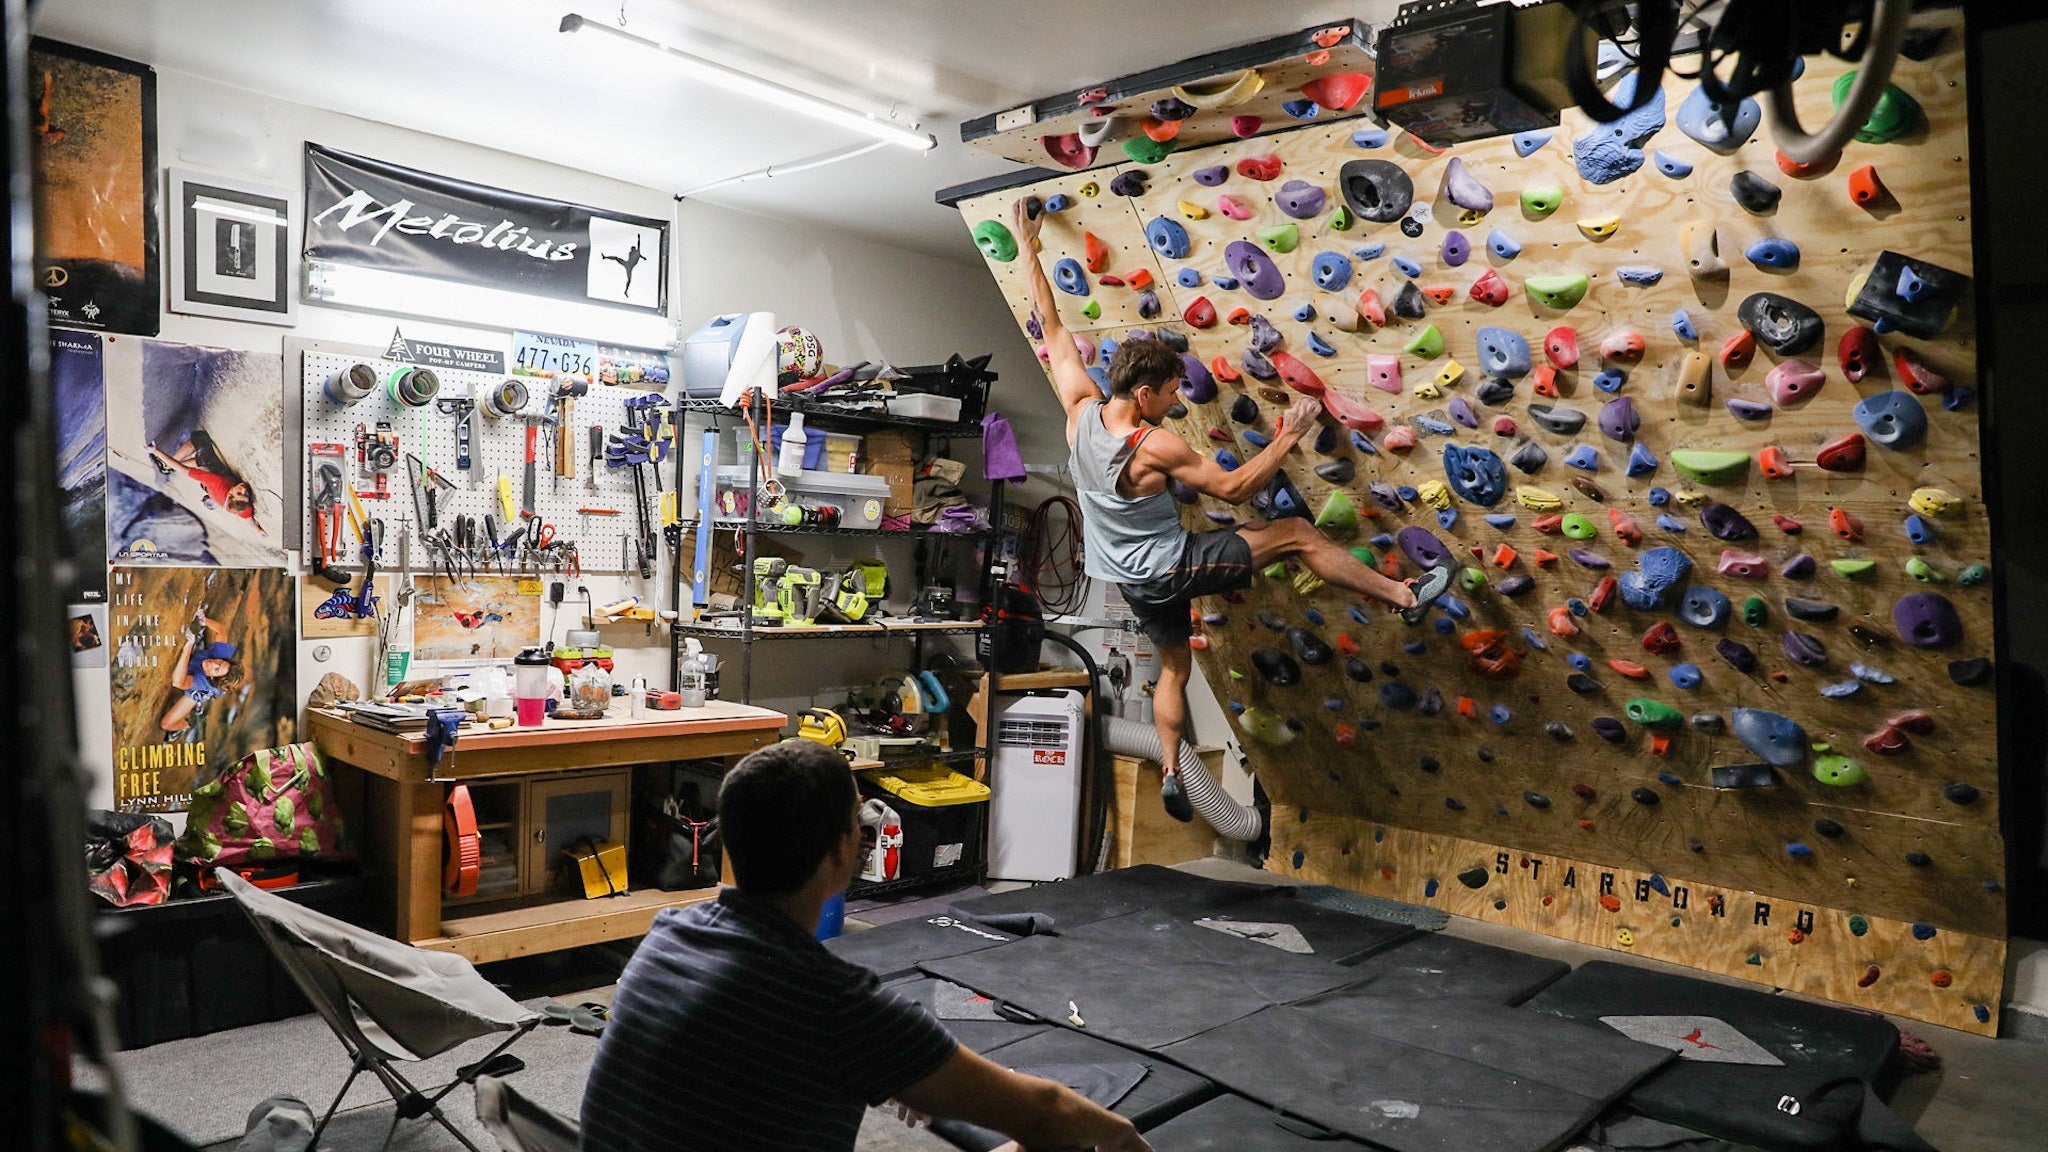 A rock climber trains on a home climbing wall